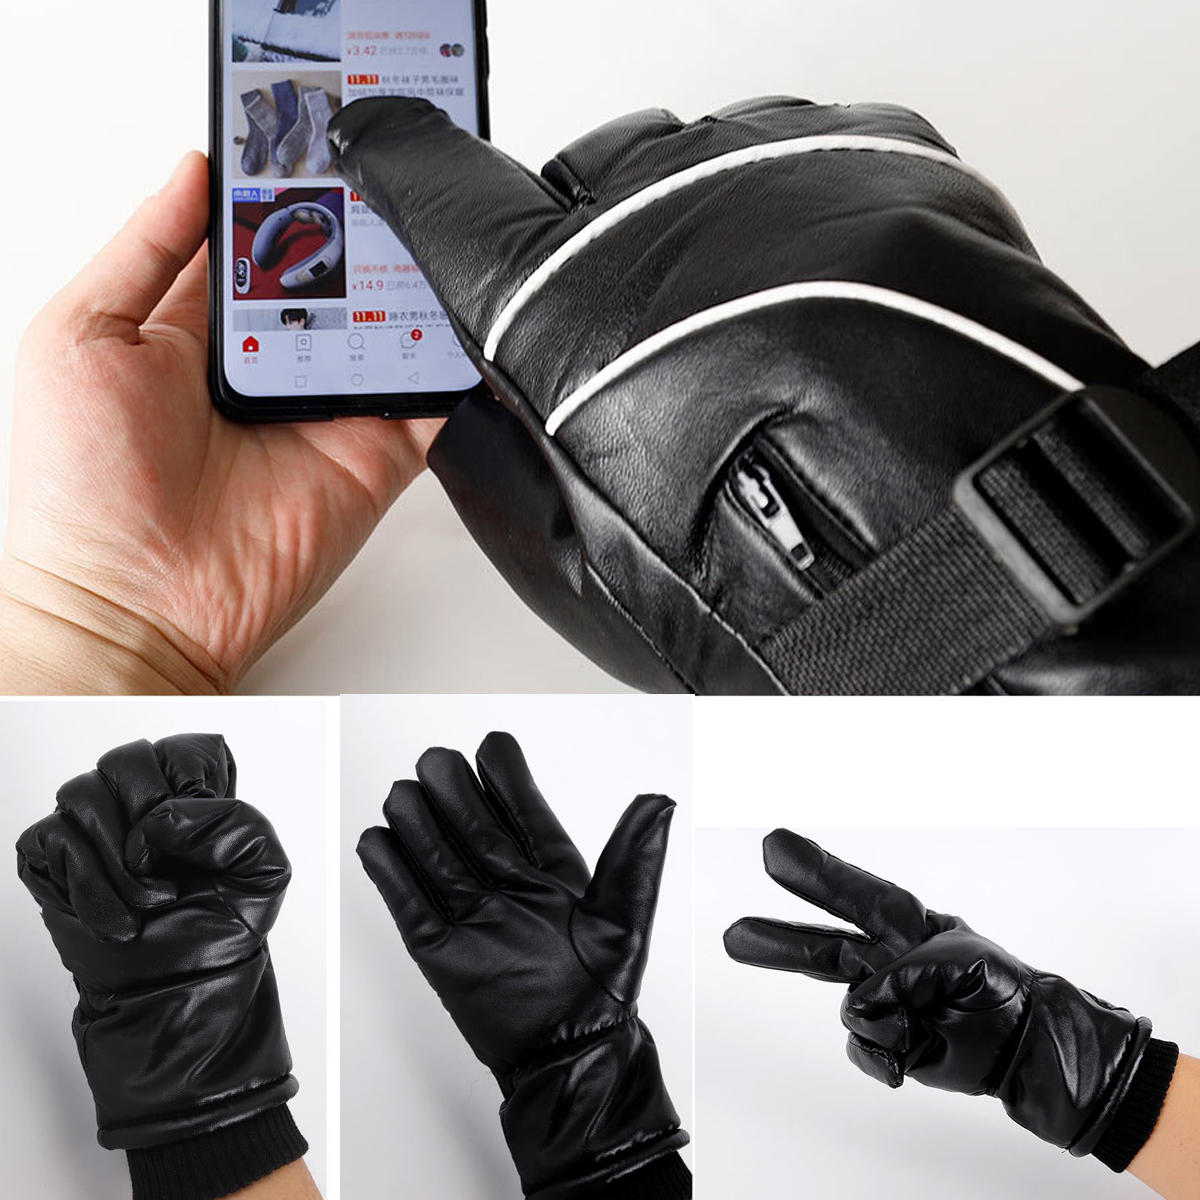 40006000mAh-Electric-Battery-Heating-Gloves-Men-Women-Winter-Heated-Warmer-Sport-Protector-1618098-7